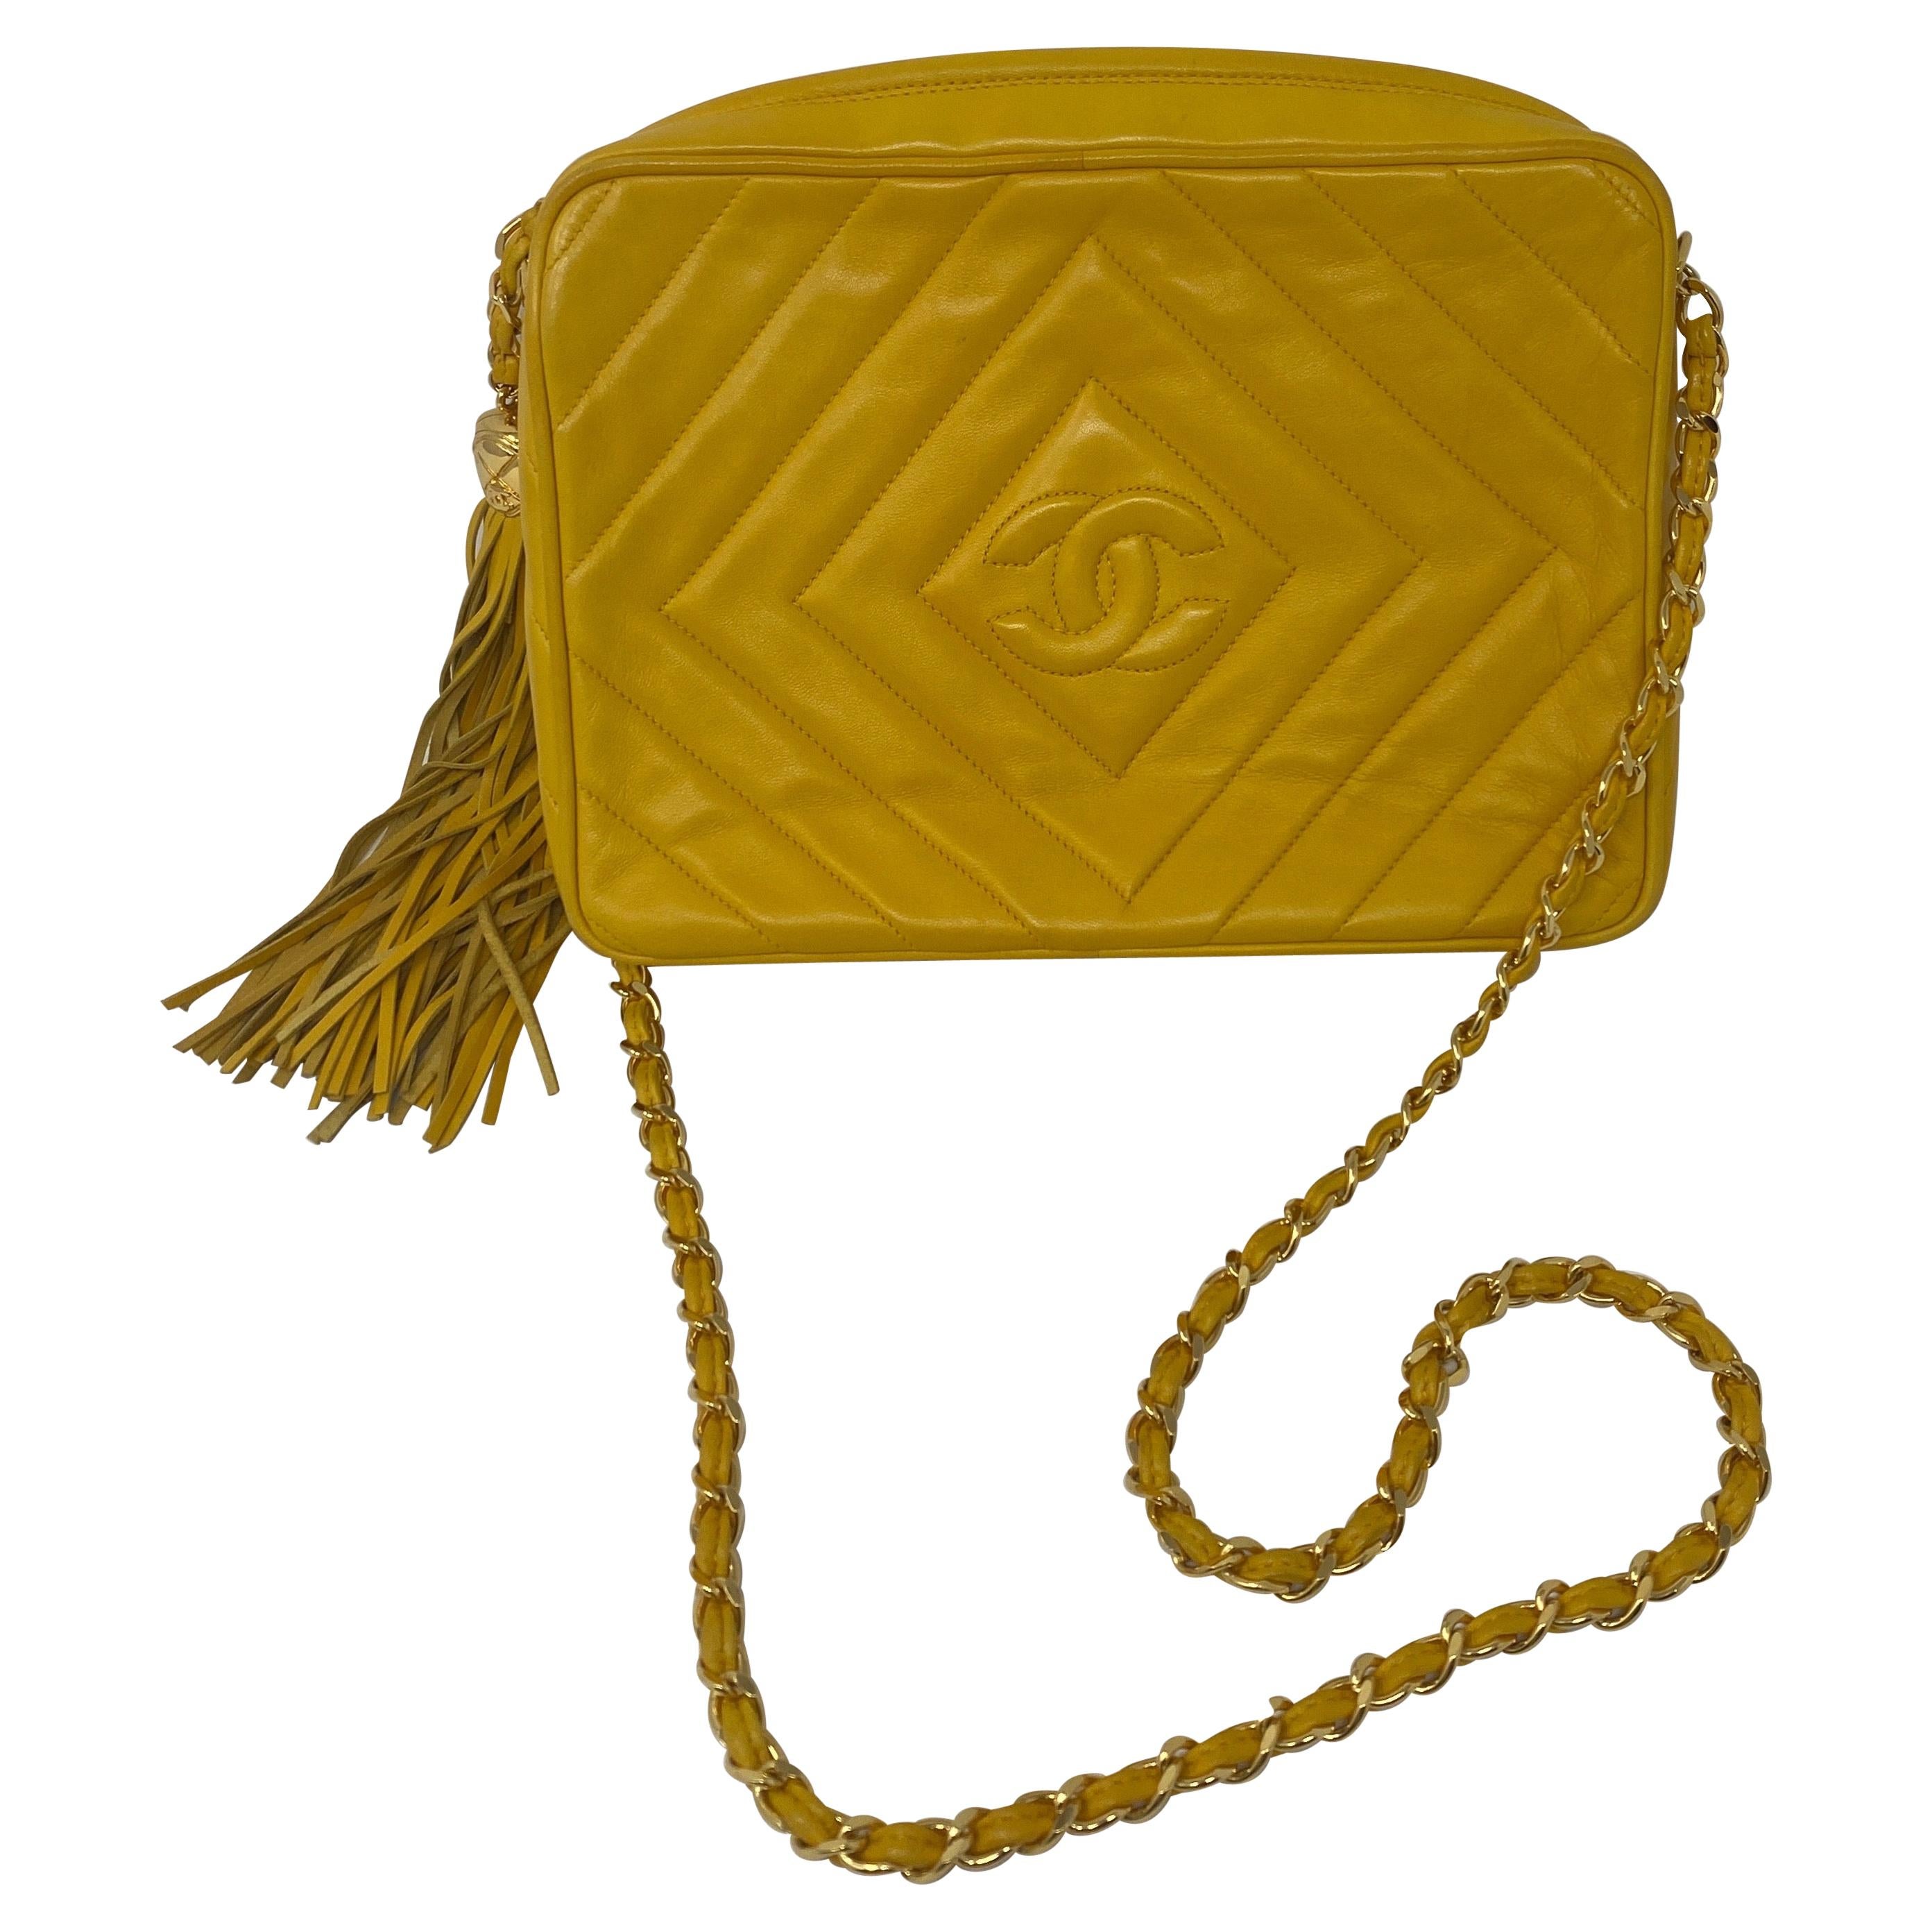 Chanel Yellow Vintage Tassel Bag 